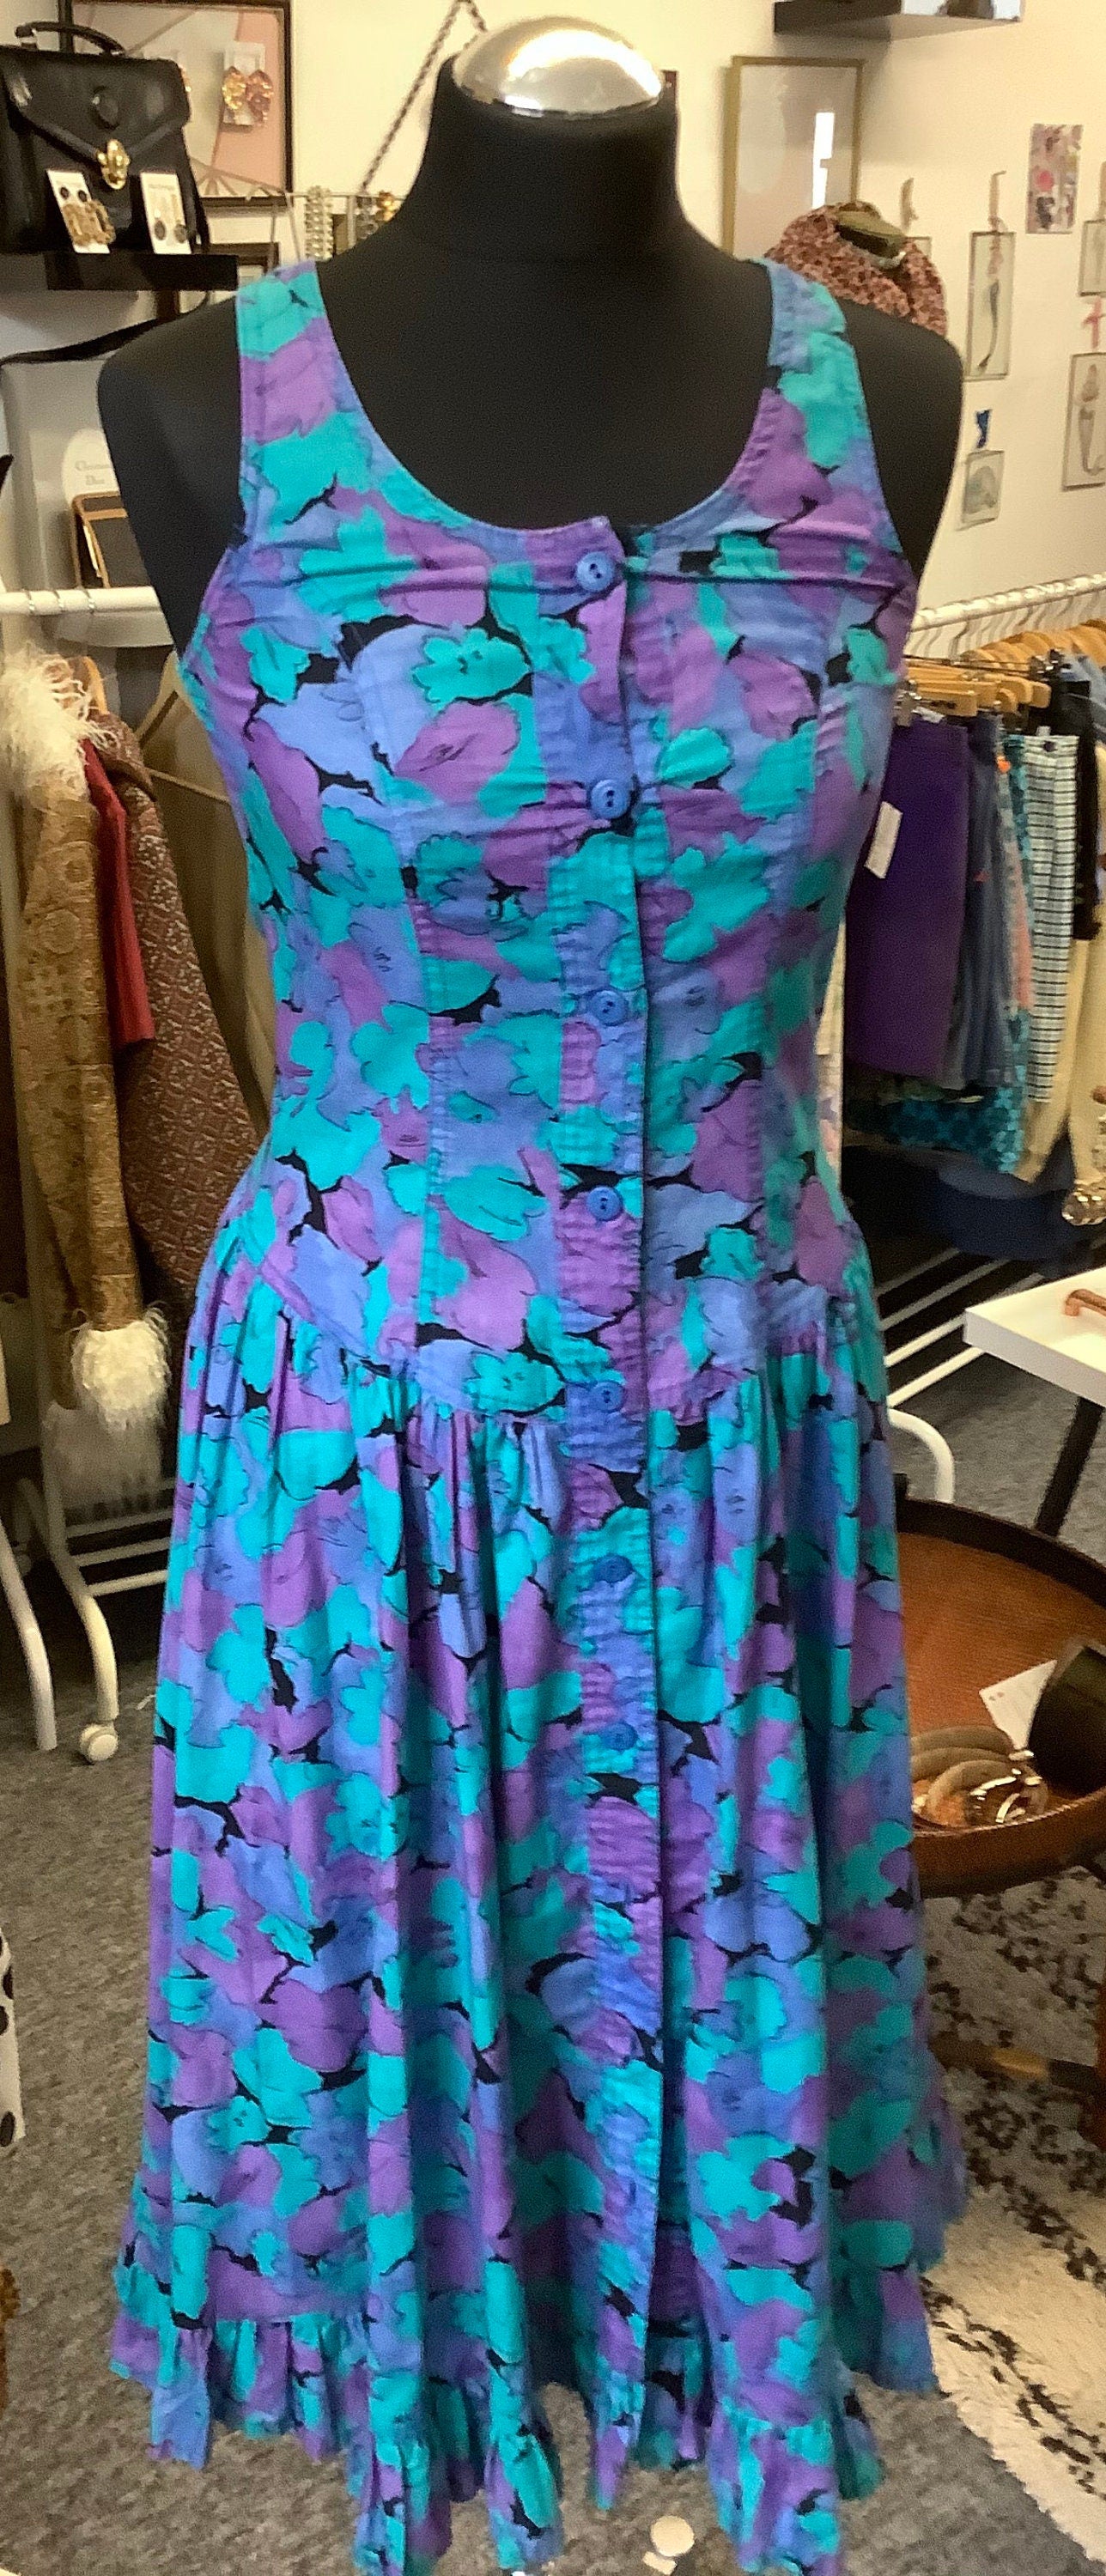 Vintage 1980’s cotton floral dress/pinafore by Richards shops